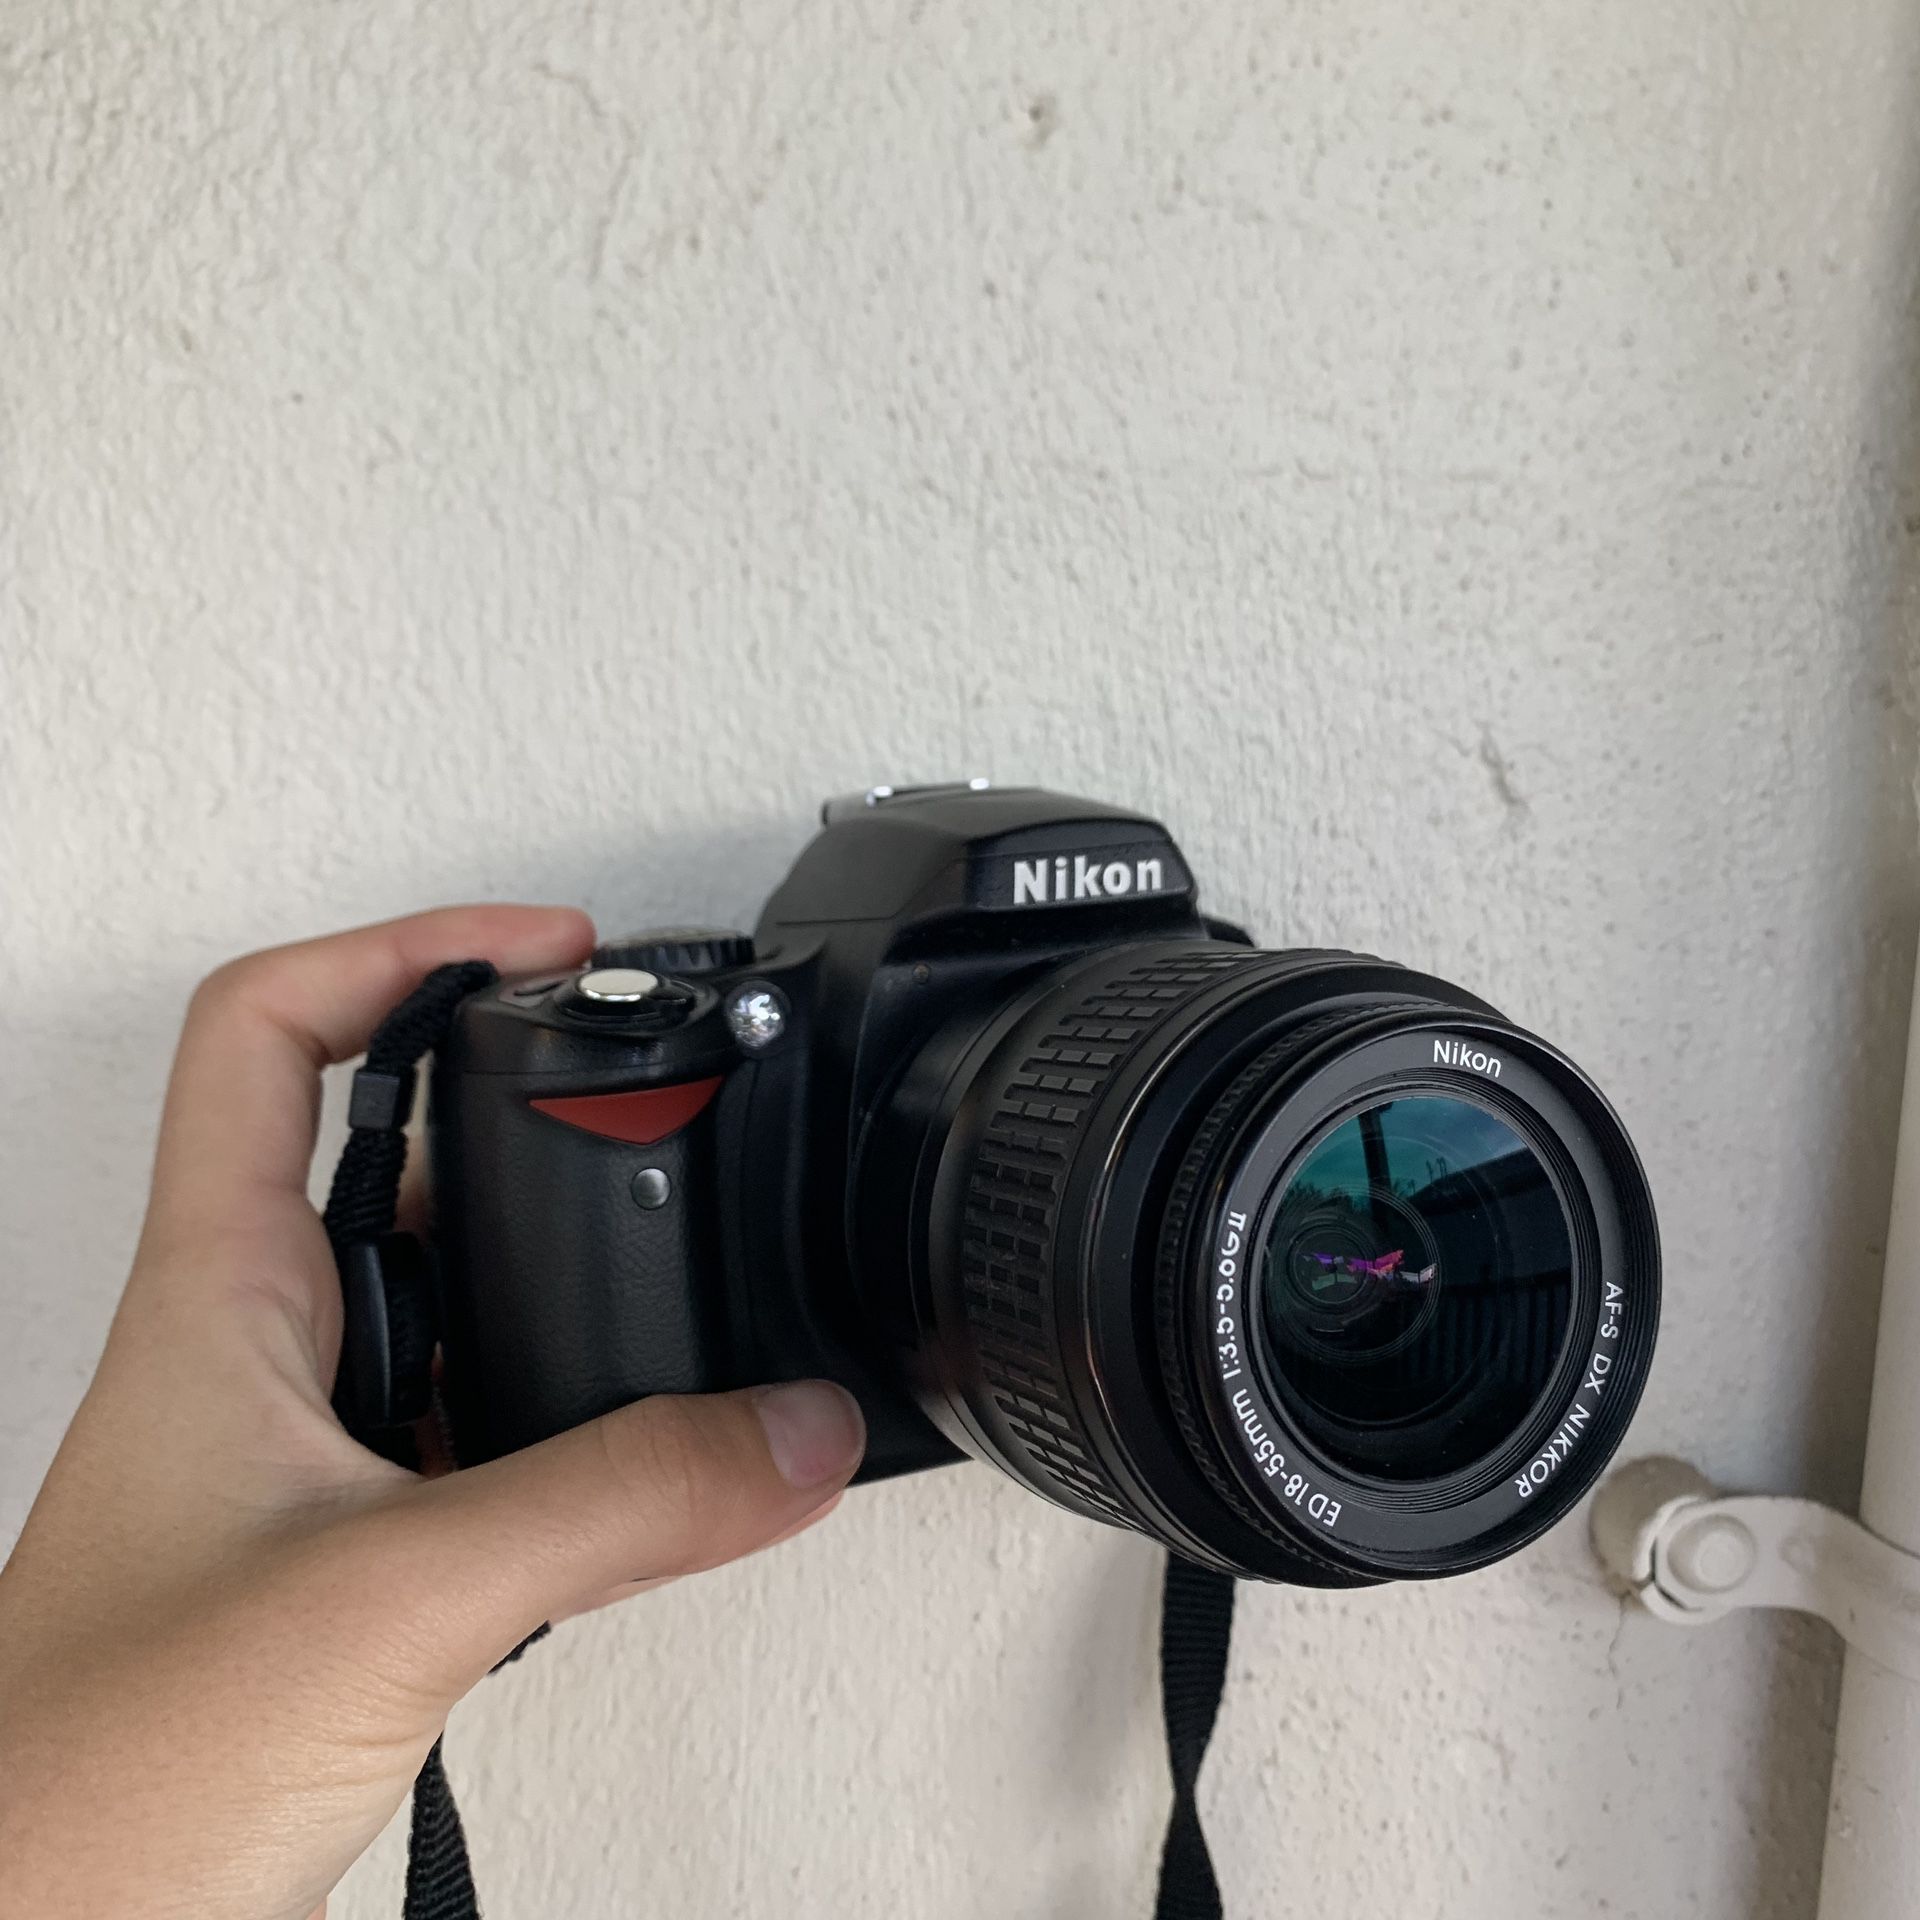 Nikon D40 Digital Camera (with 2 lenses)